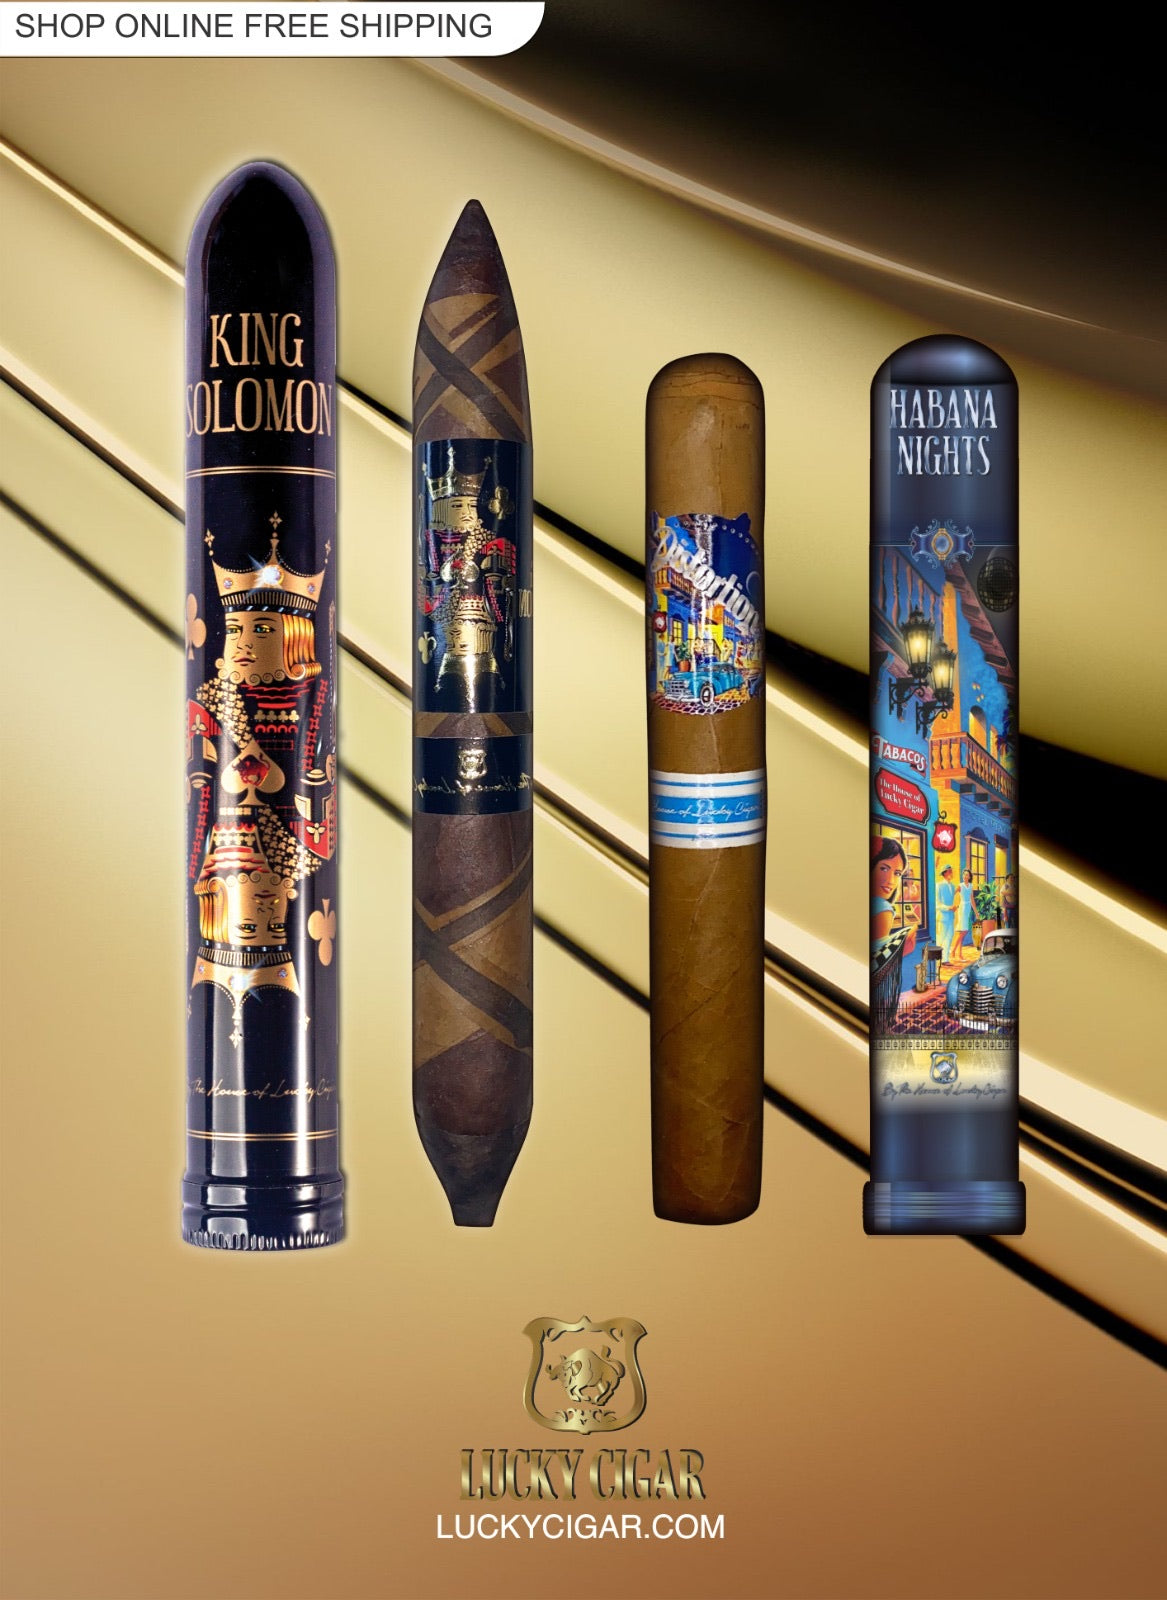 Lucky Cigar Sampler Sets: Set of 2 Cigars, King Solomon, Habana Nights